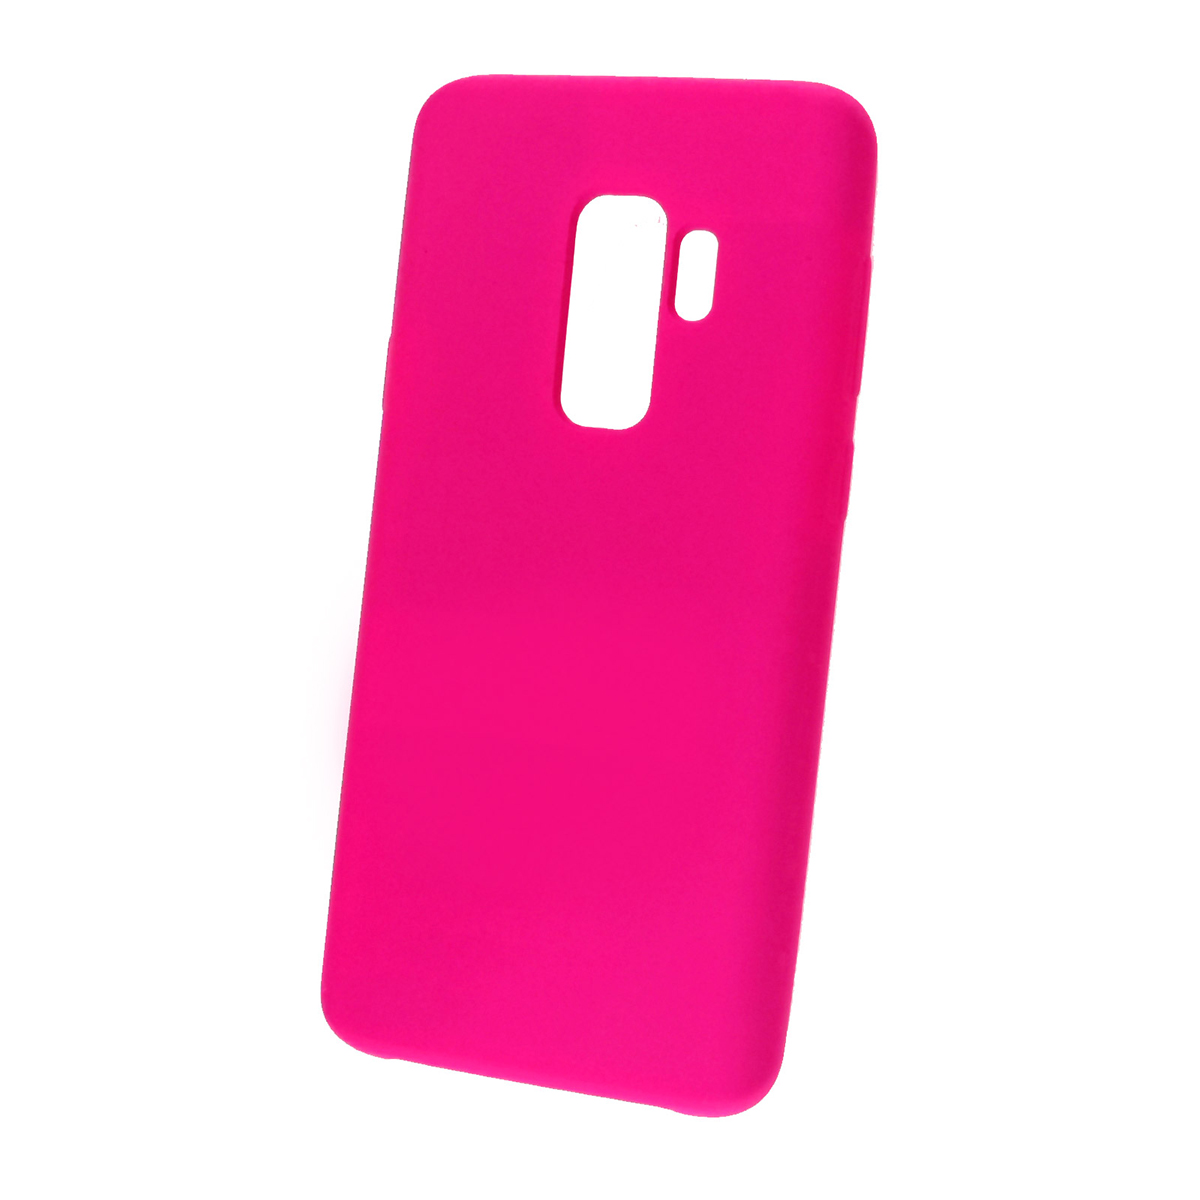 Чехол накладка Silicon Cover для SAMSUNG Galaxy S9 Plus (SM-G965), силикон, бархат, цвет ярко розовый.